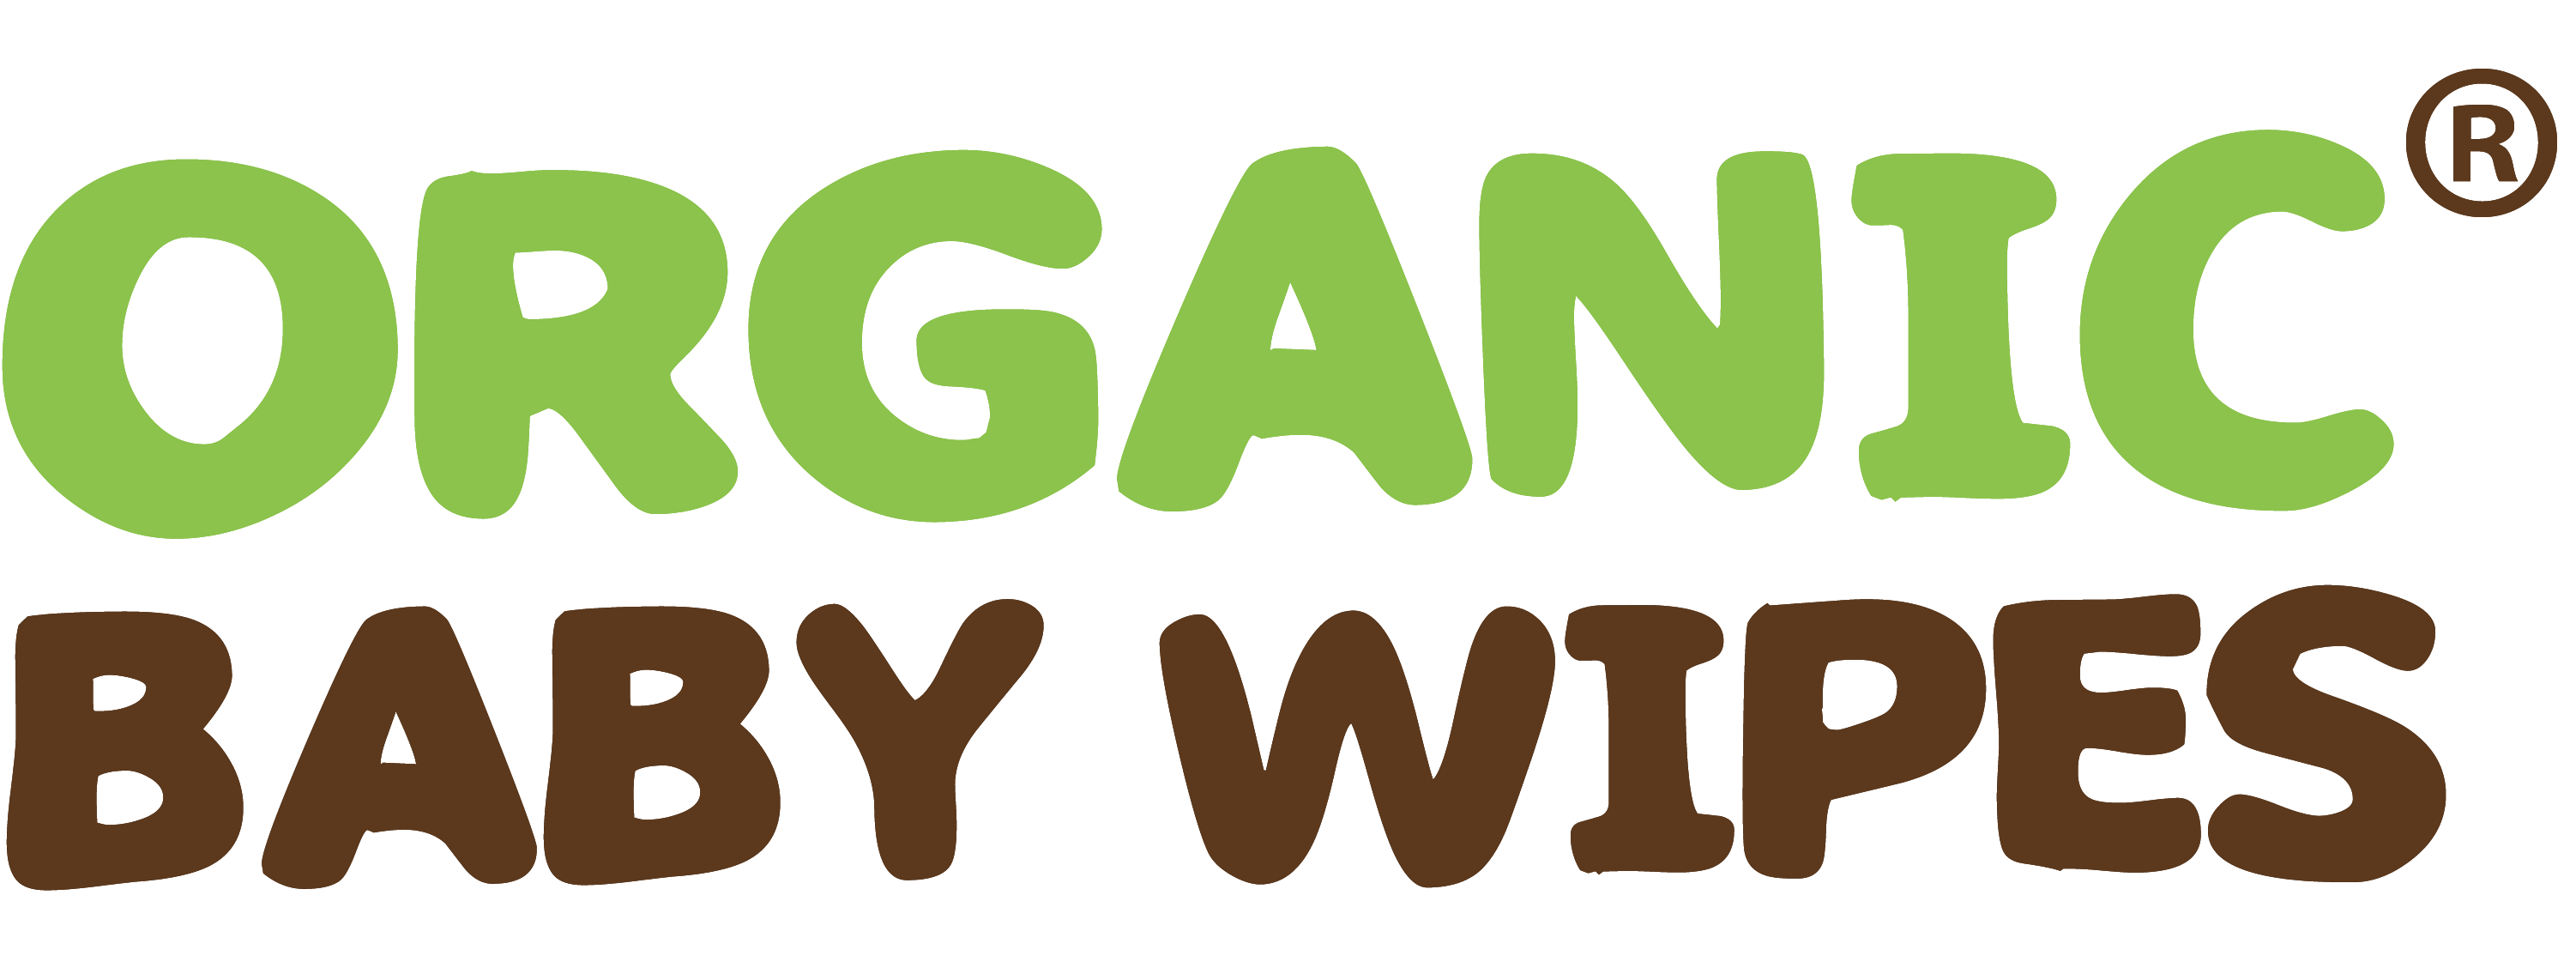 Little Green organic baby wipes logo